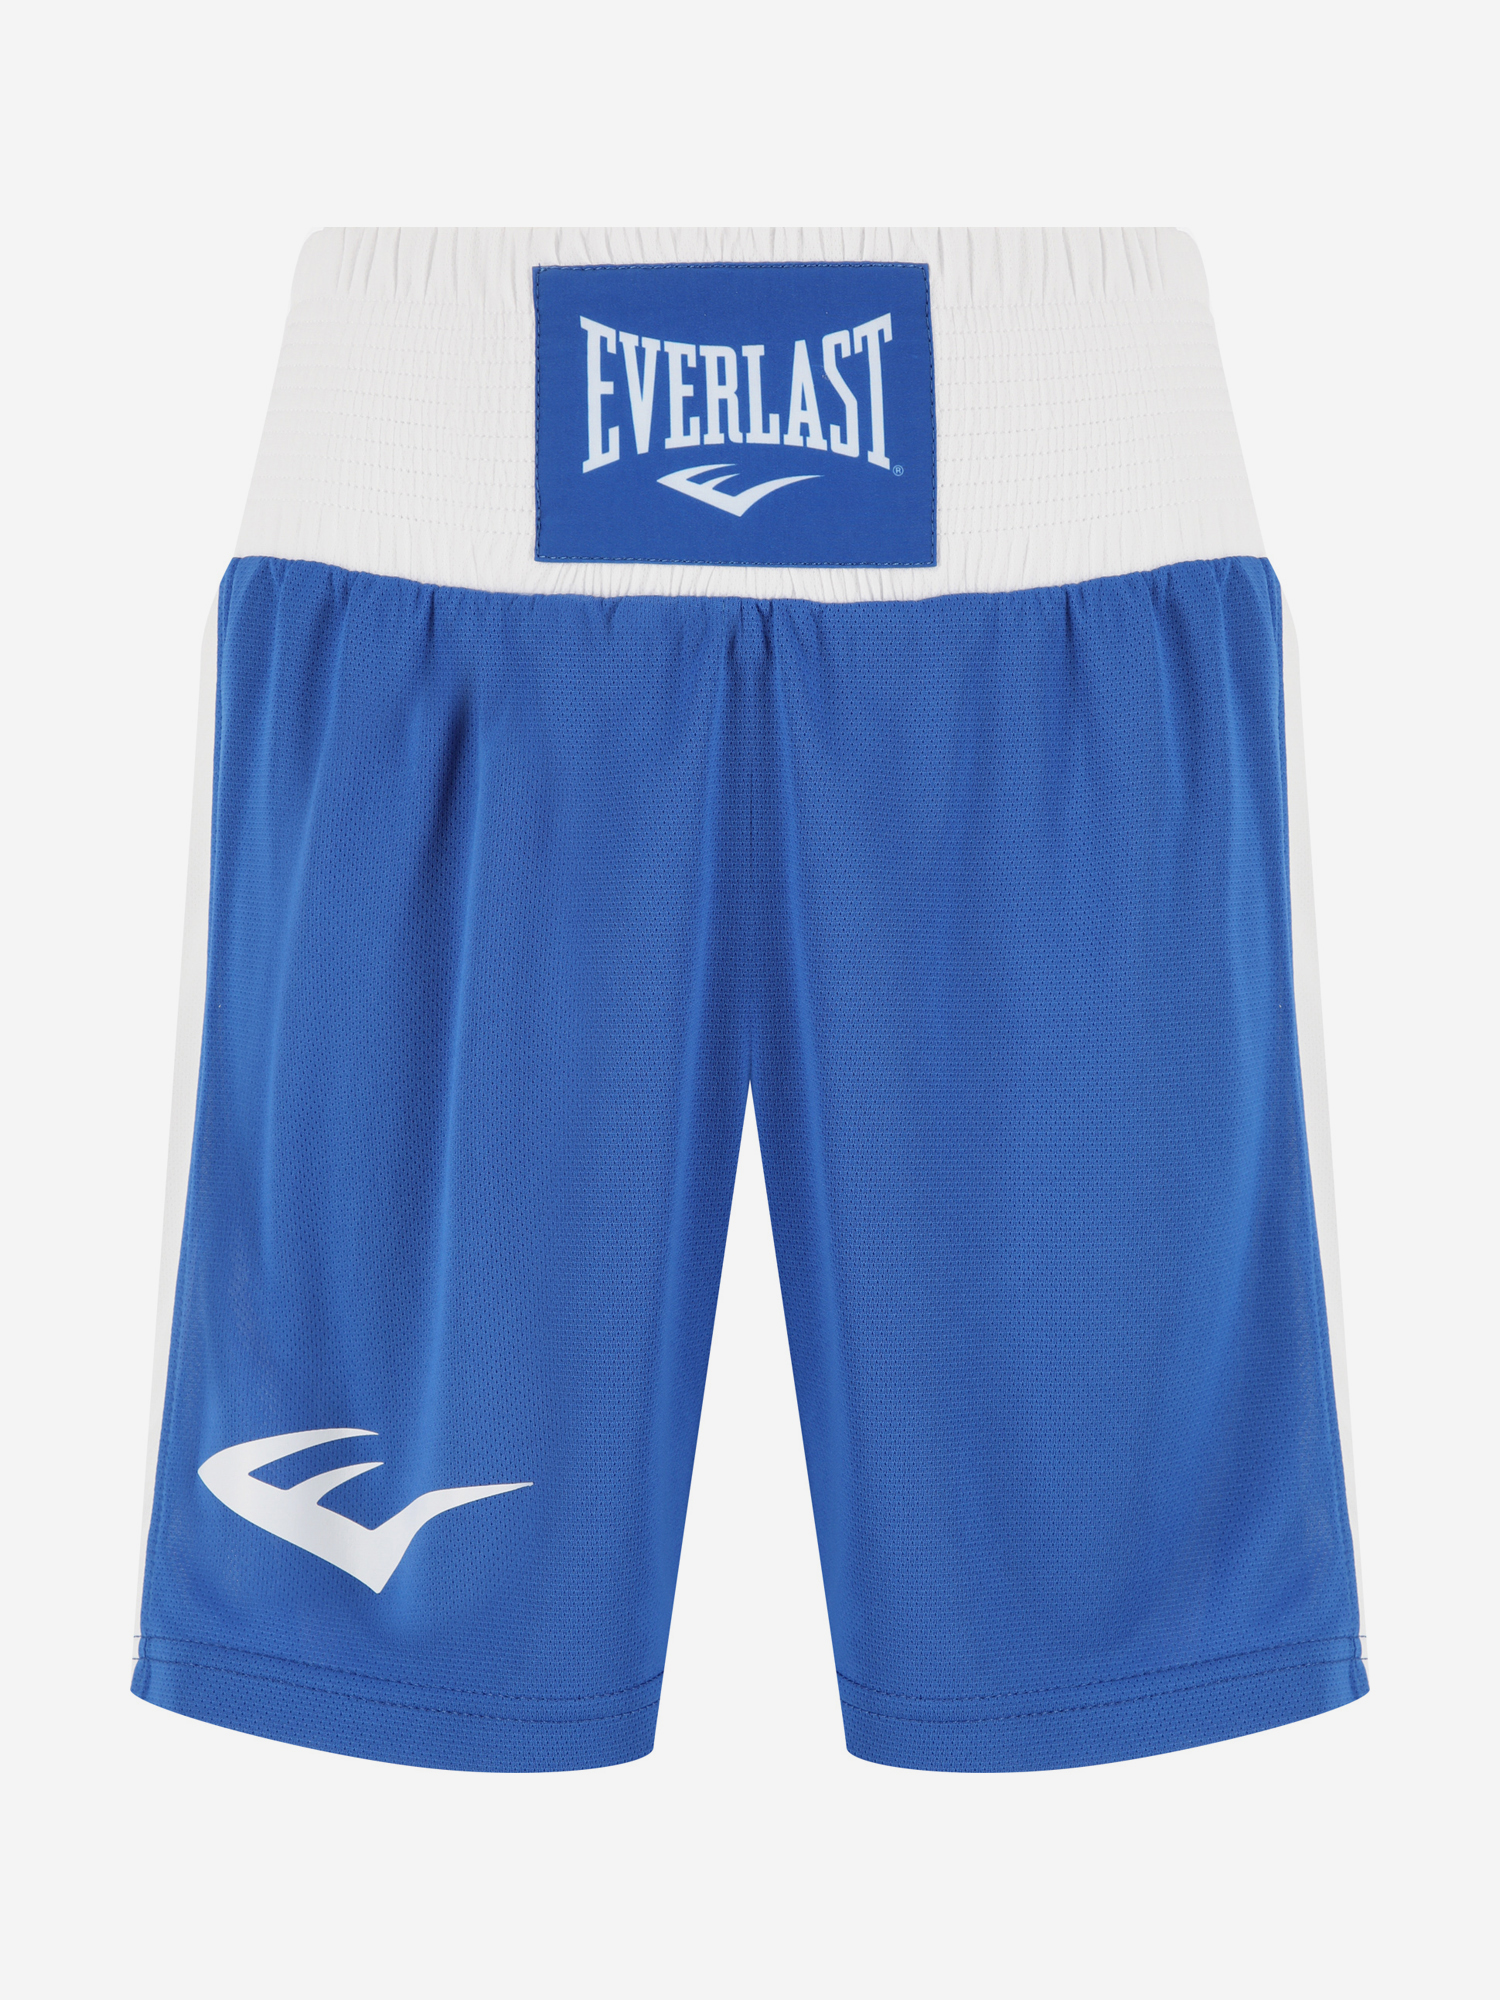 Шорты для бокса Everlast Shorts Elite, Синий шорты для бокса детские everlast elite синий